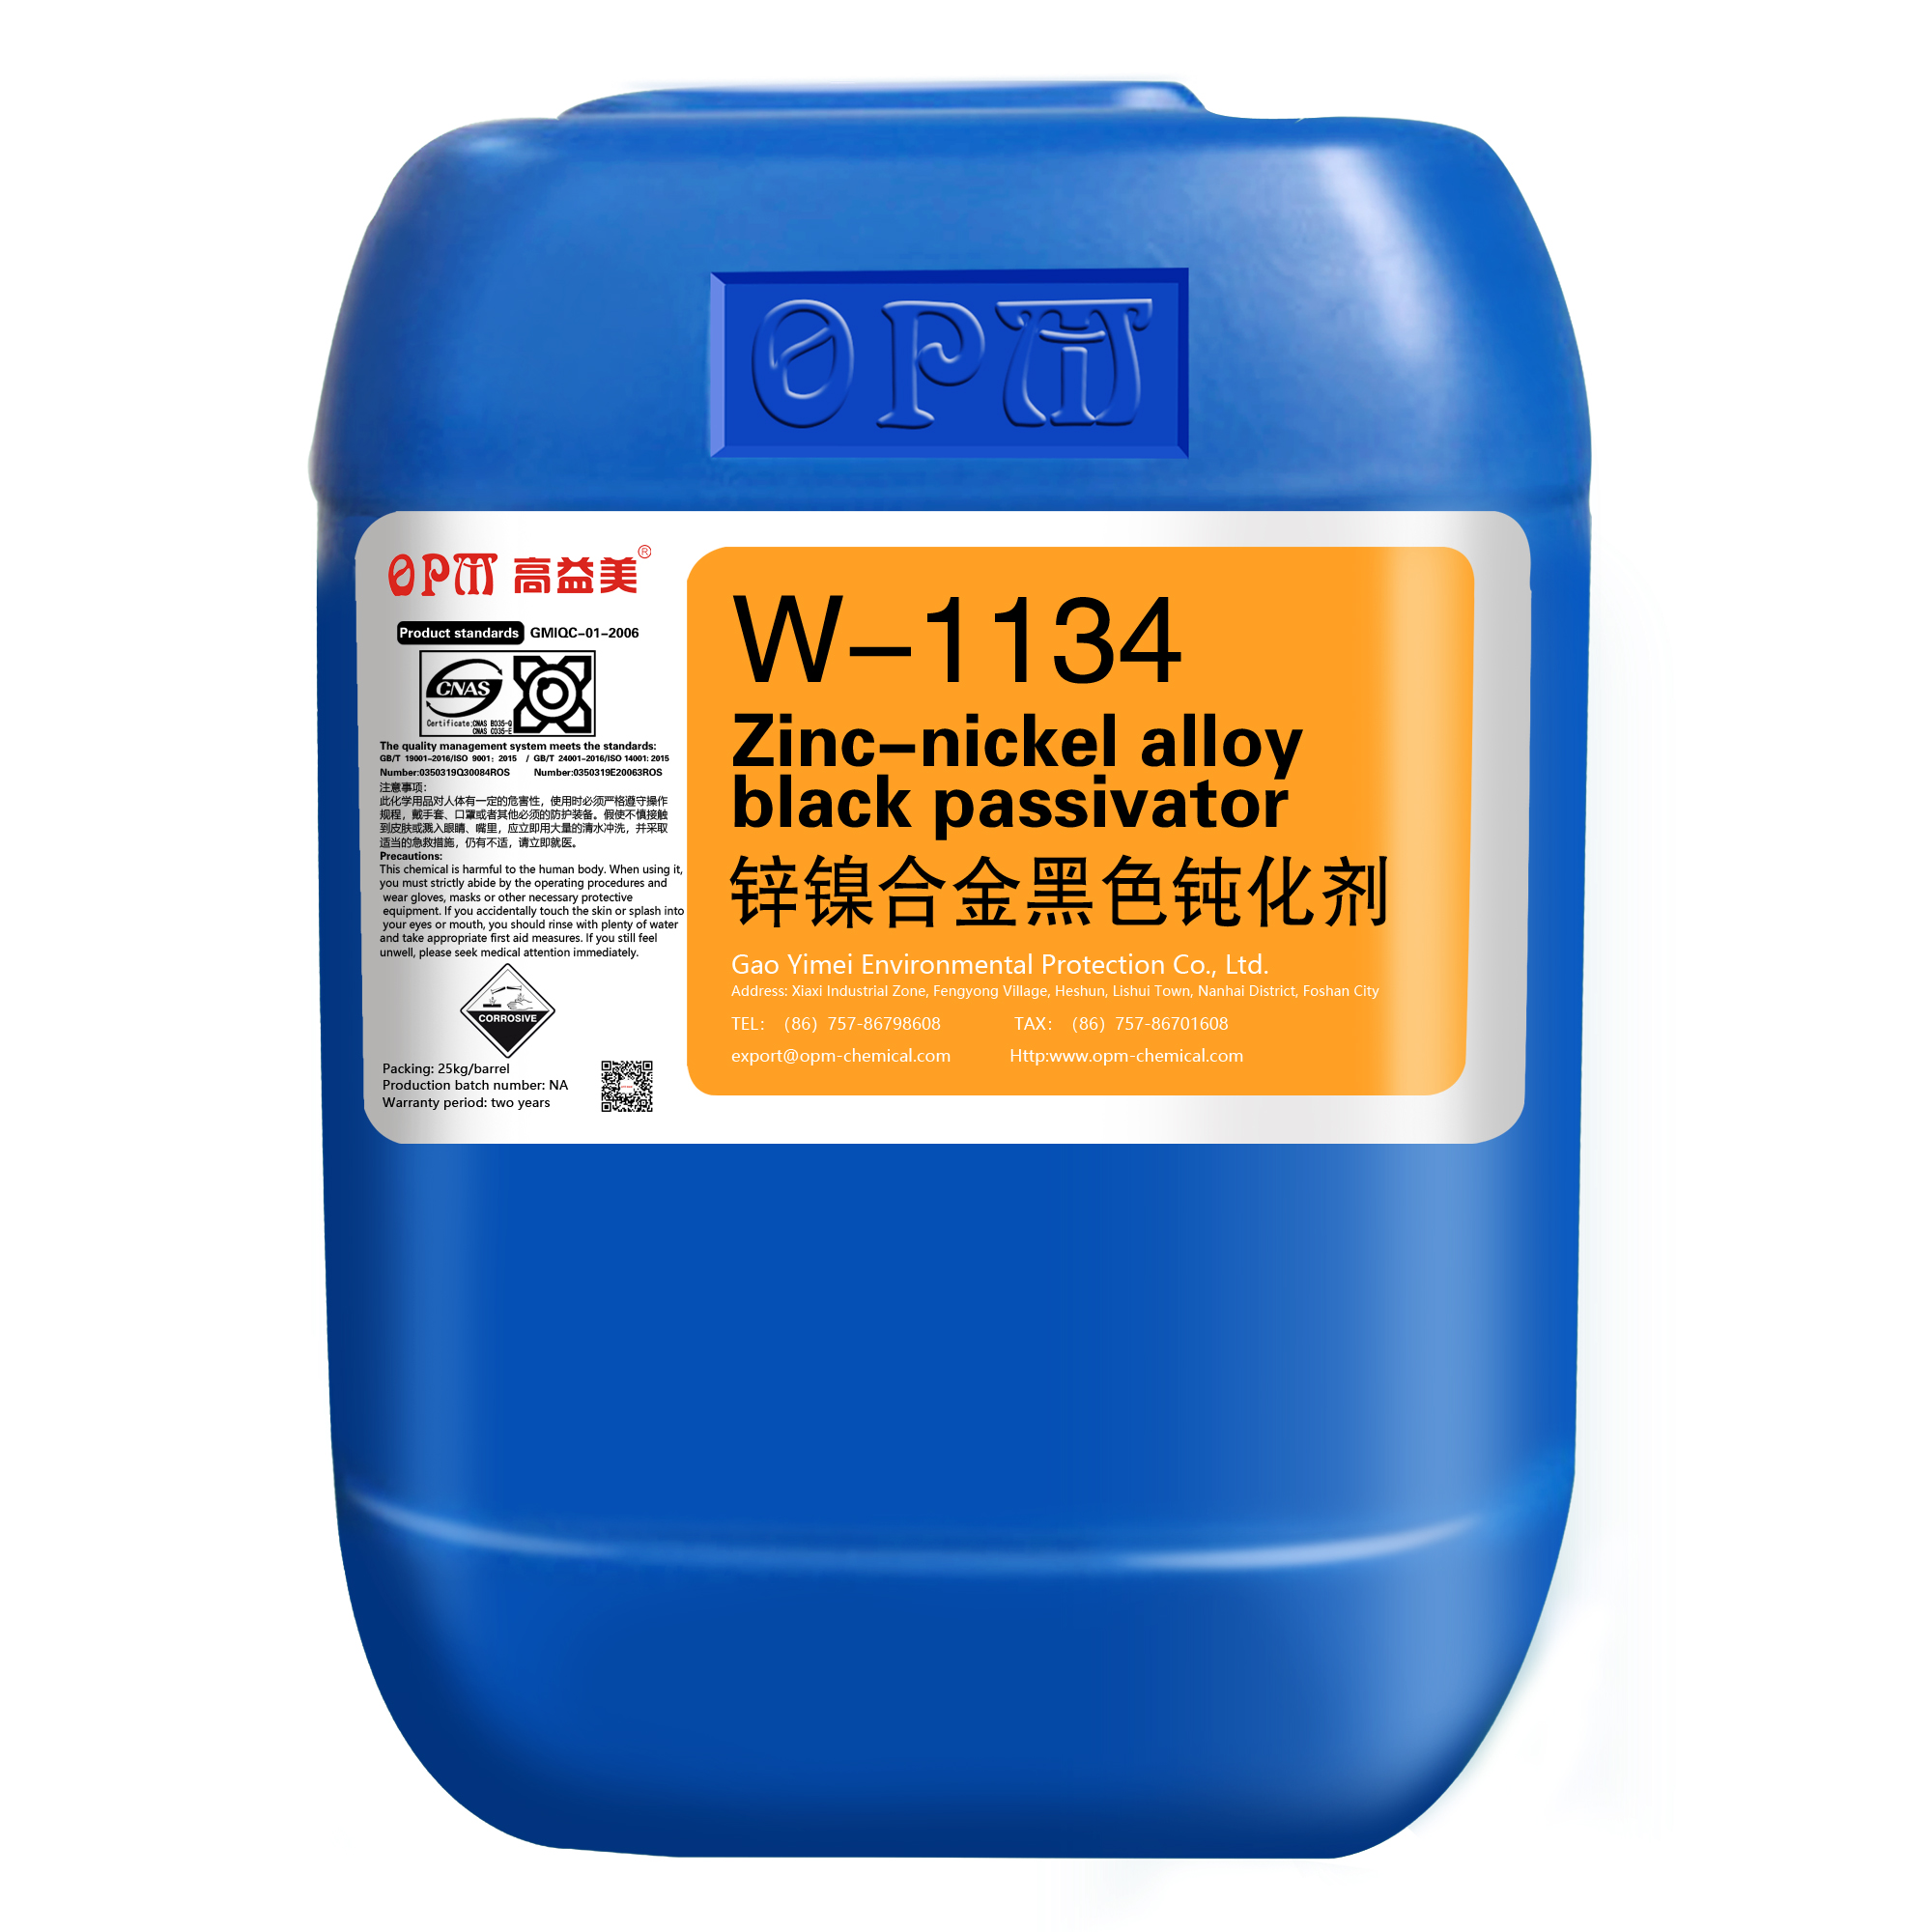 W-1134 black passivator for Zinc-nickel alloy